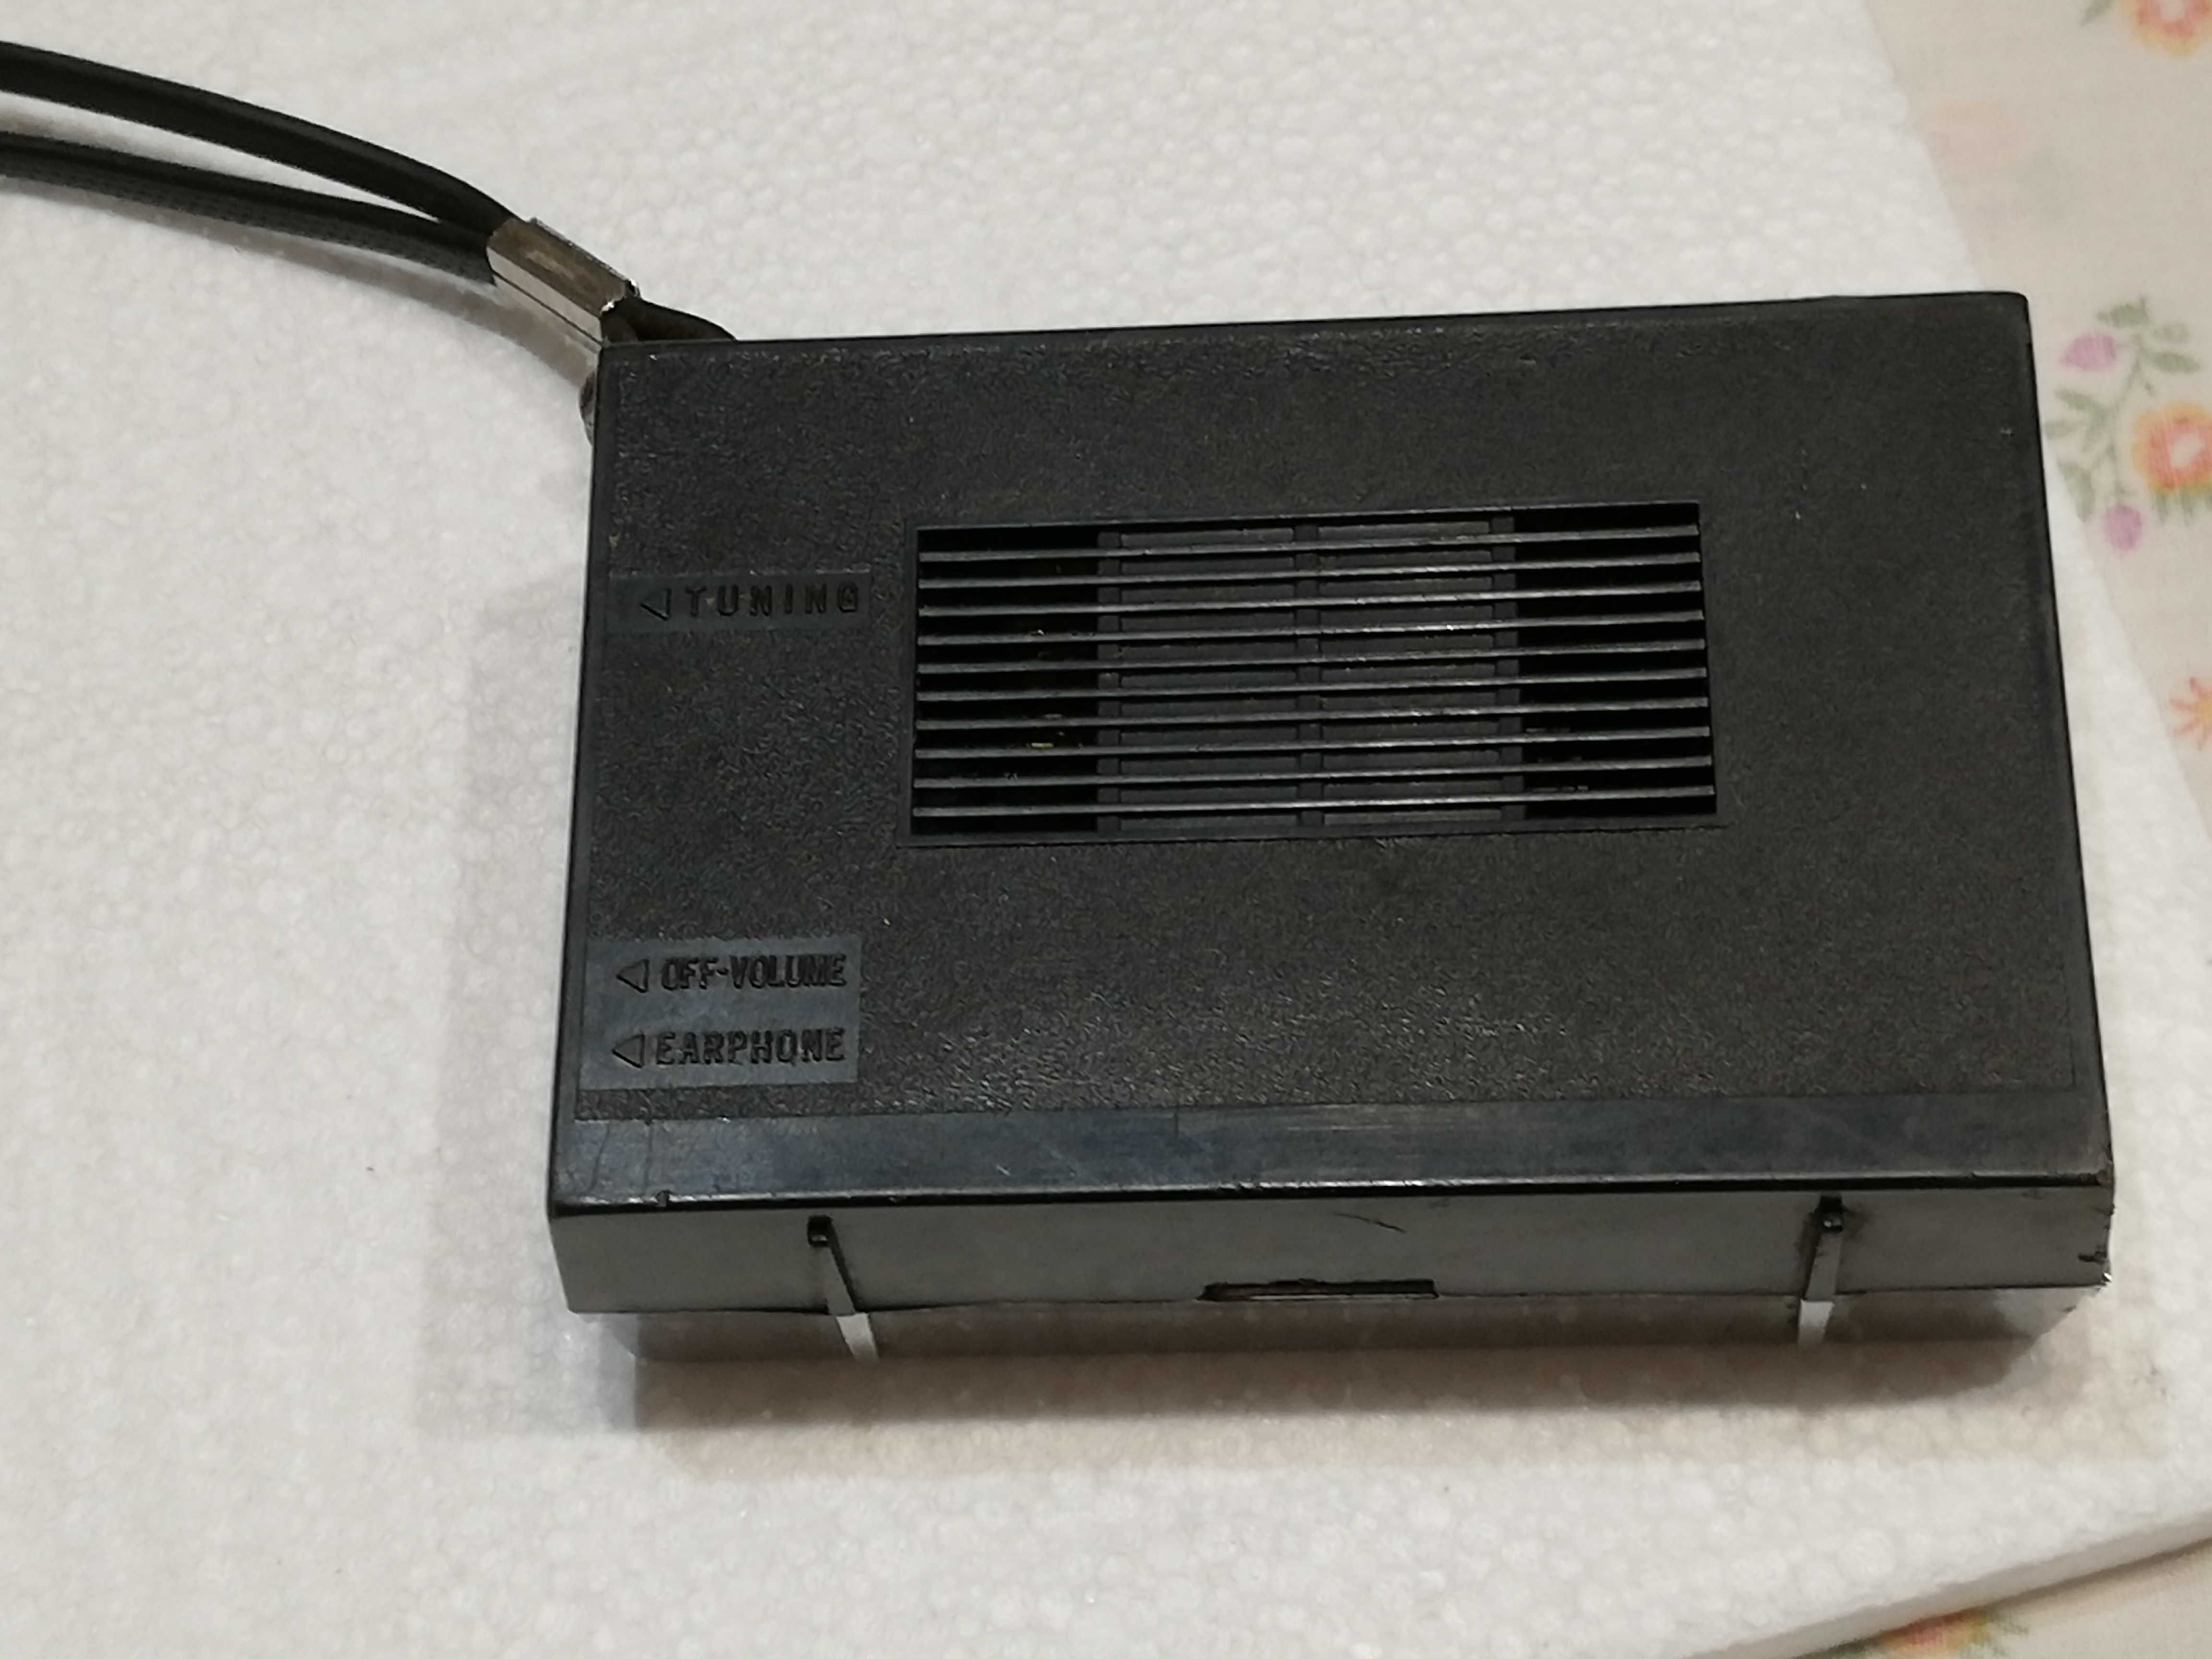 Sony transistor 6 radio tranzystorowe mini VINTAGE lata 60 te